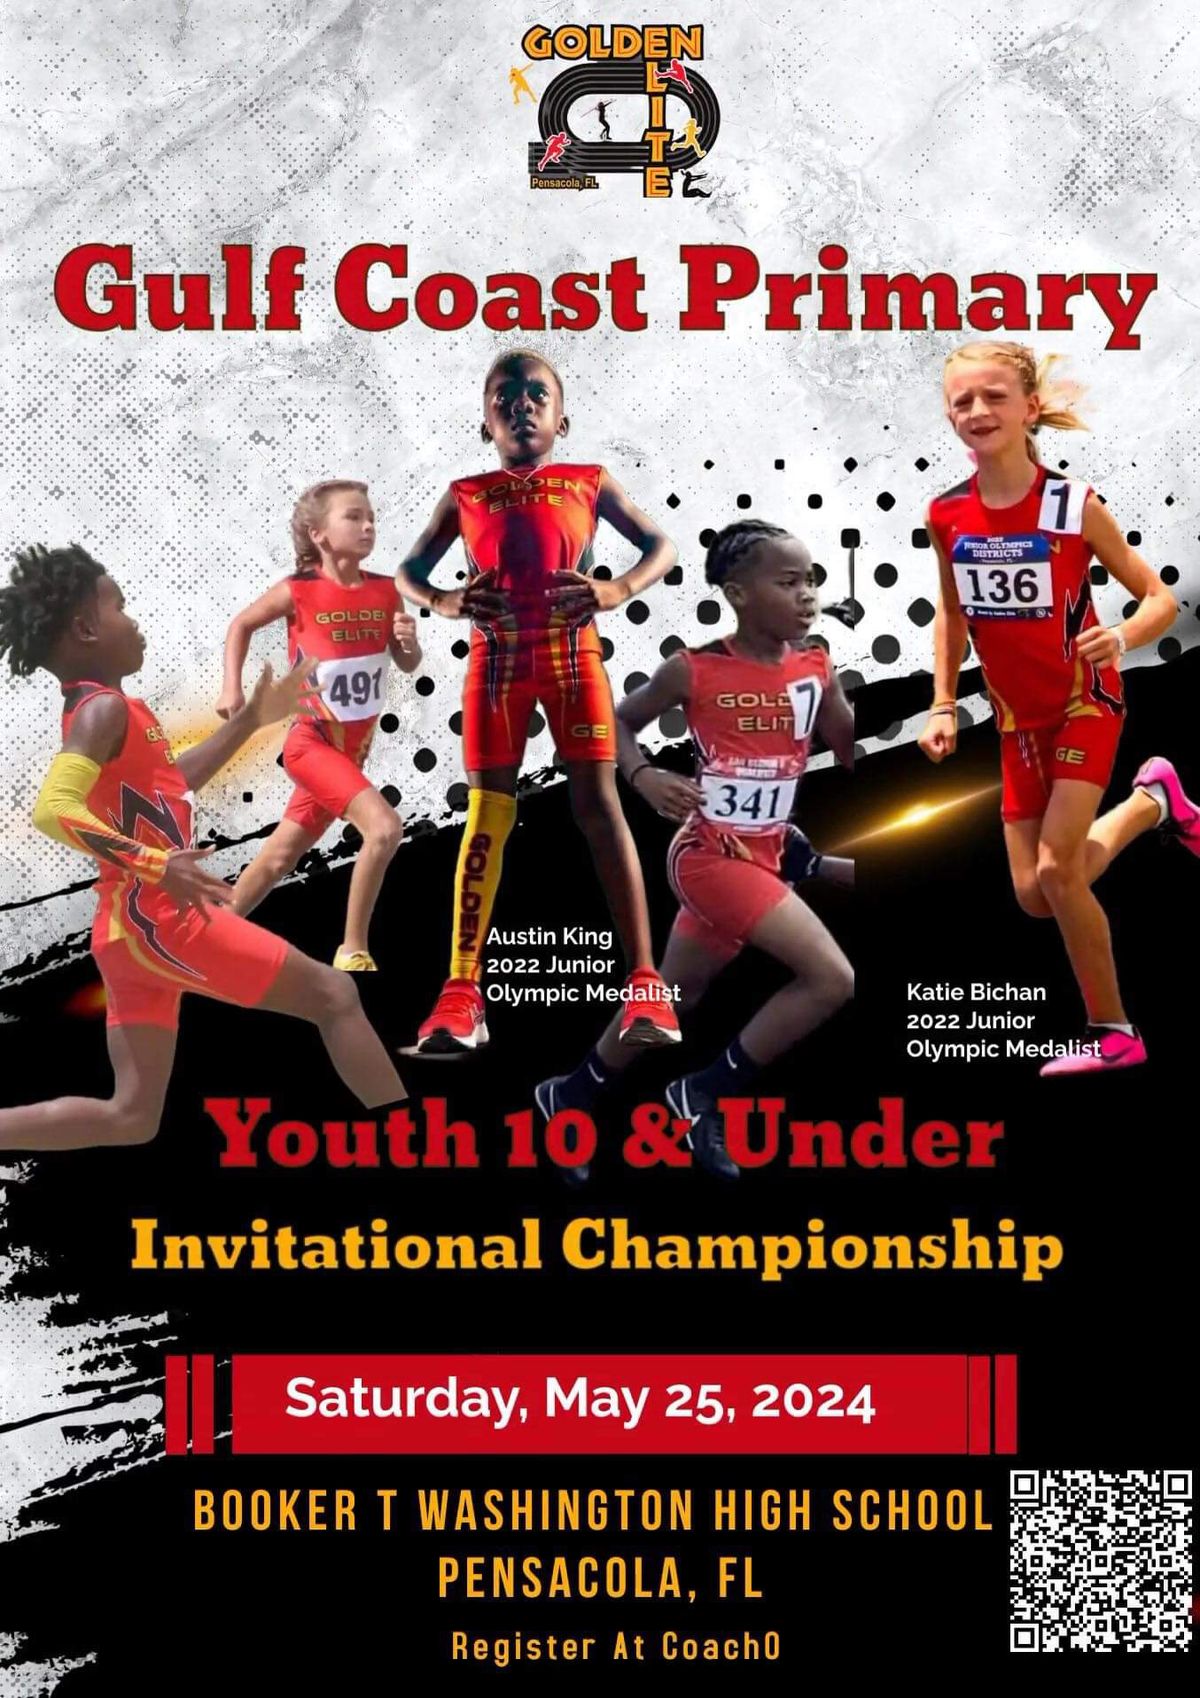 Golden Elite Presents The Gulf Coast Primary Invitational Championship 